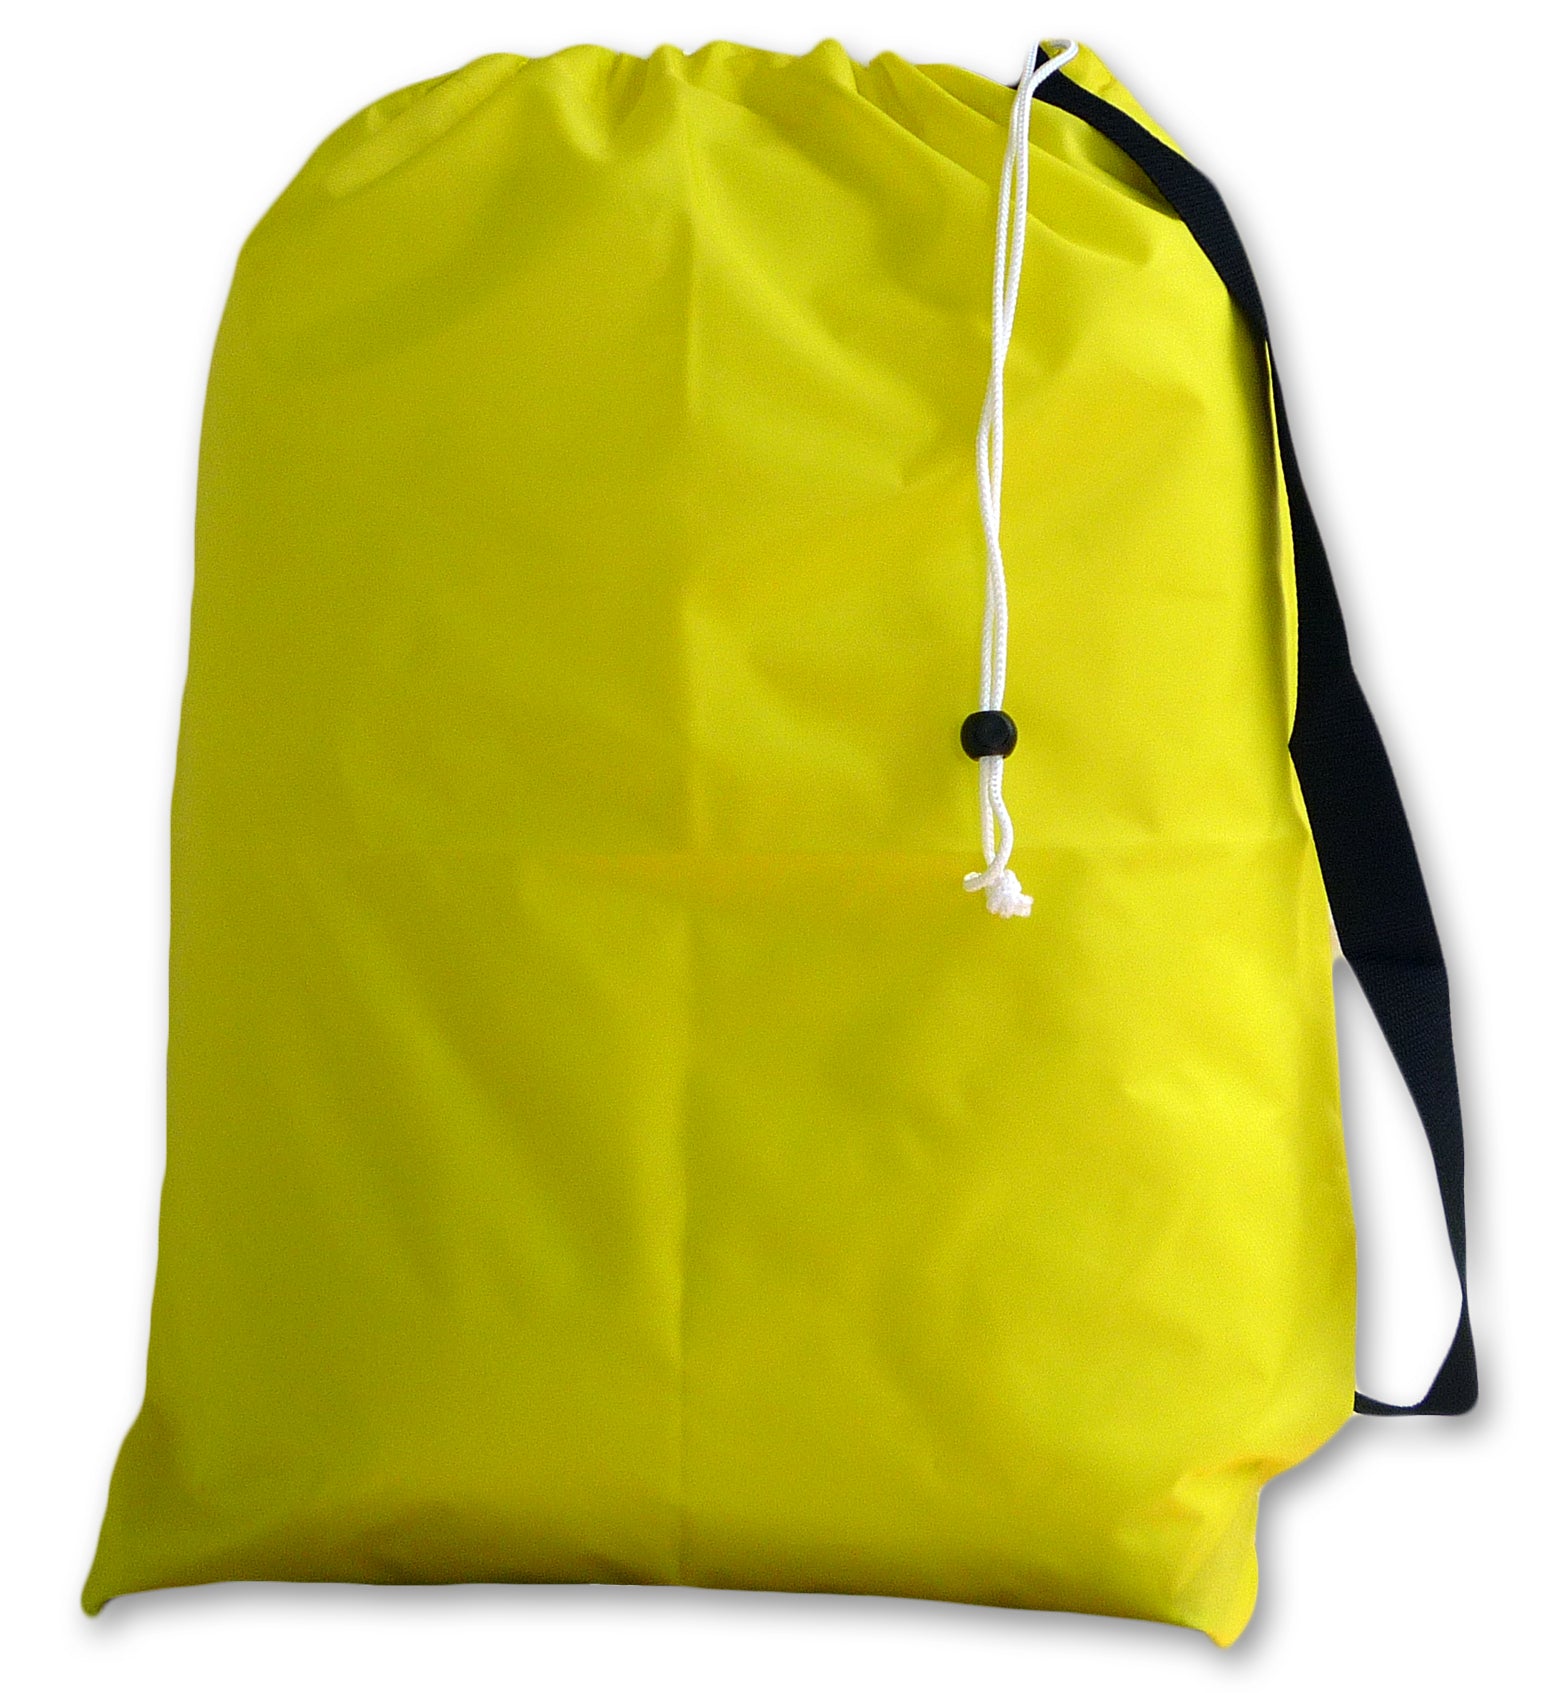 Medium Laundry Bag with Strap, Drawstring, Yellow